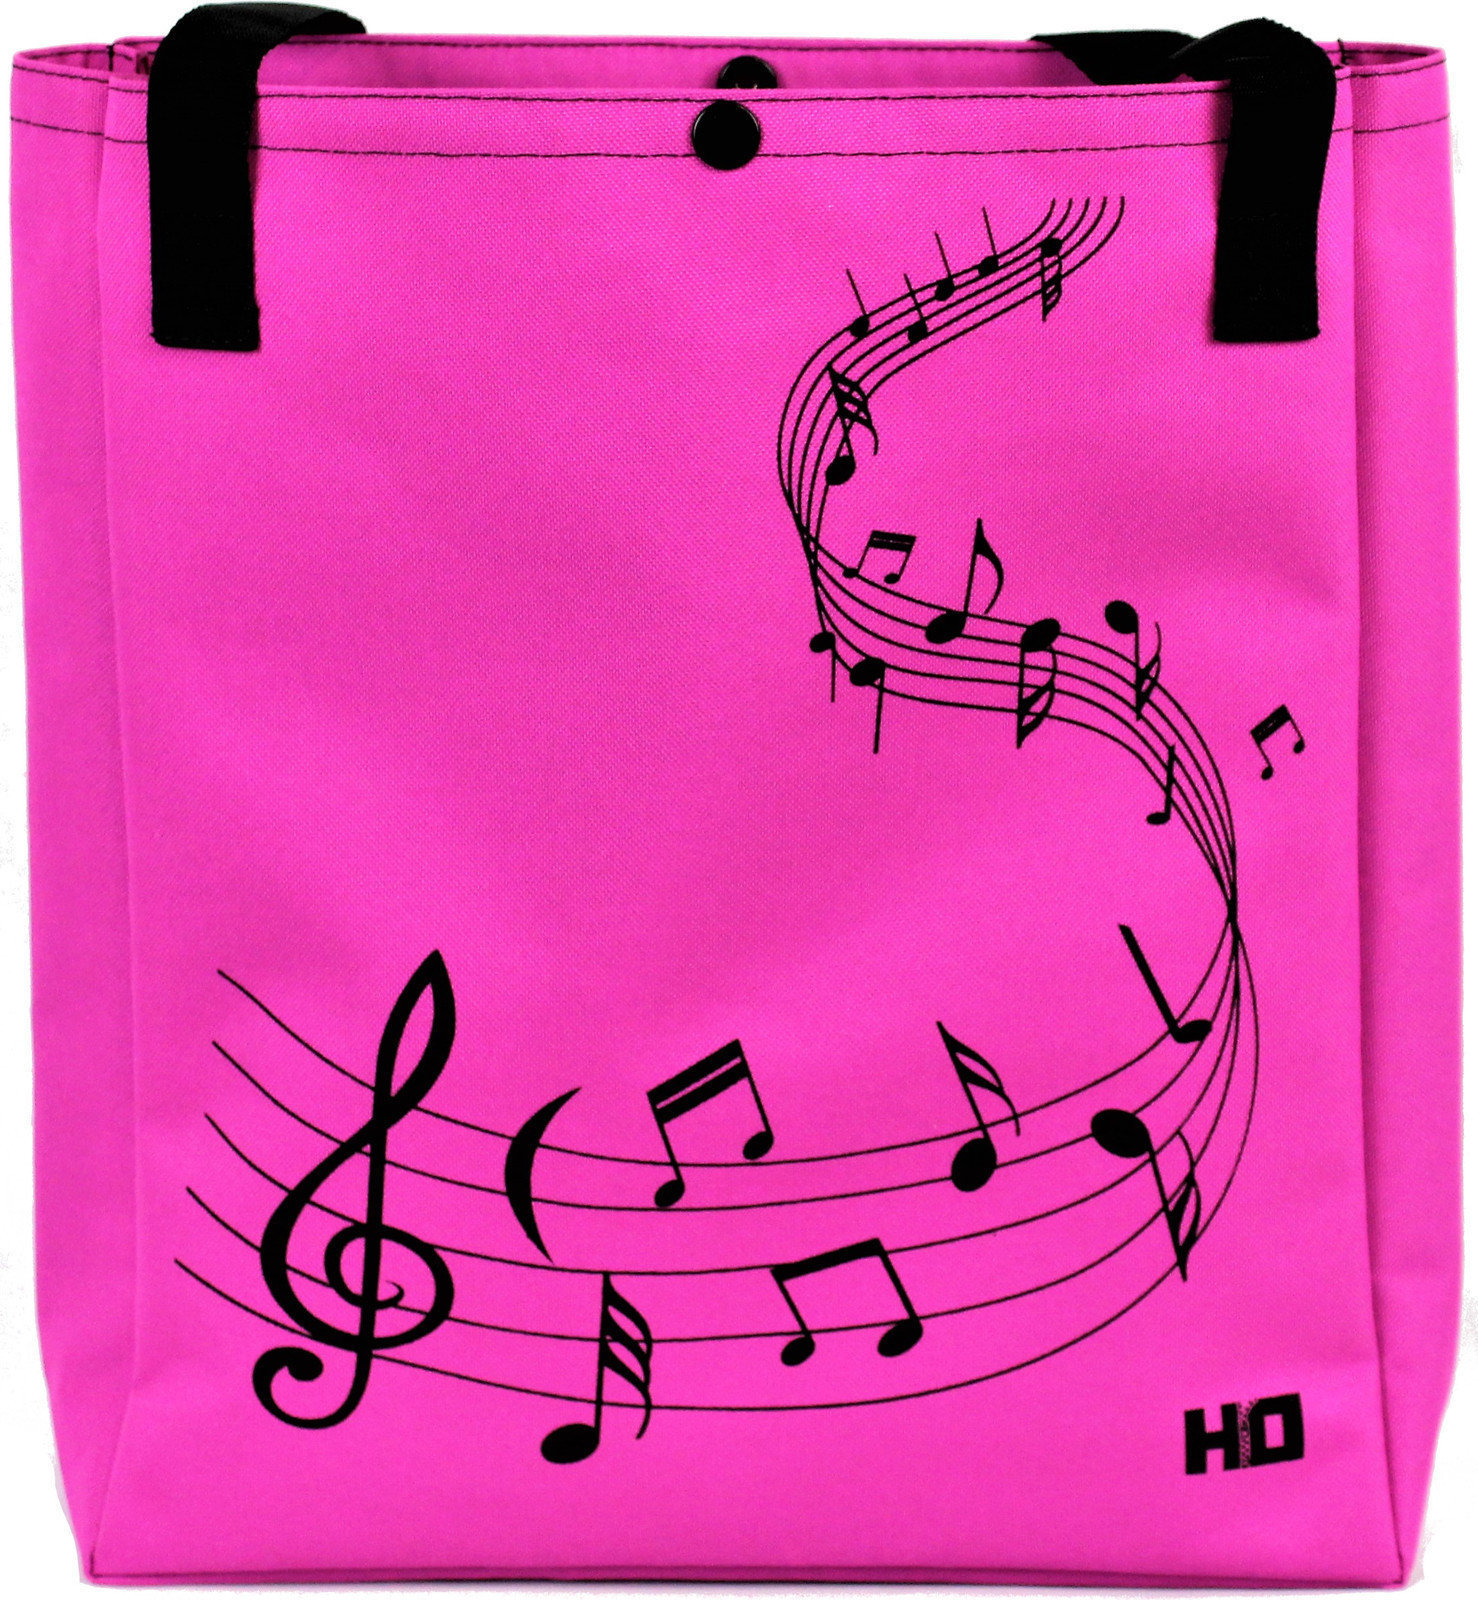 Saco de compras Hudební Obaly H-O TNKLL122 Melody Preto-Pink